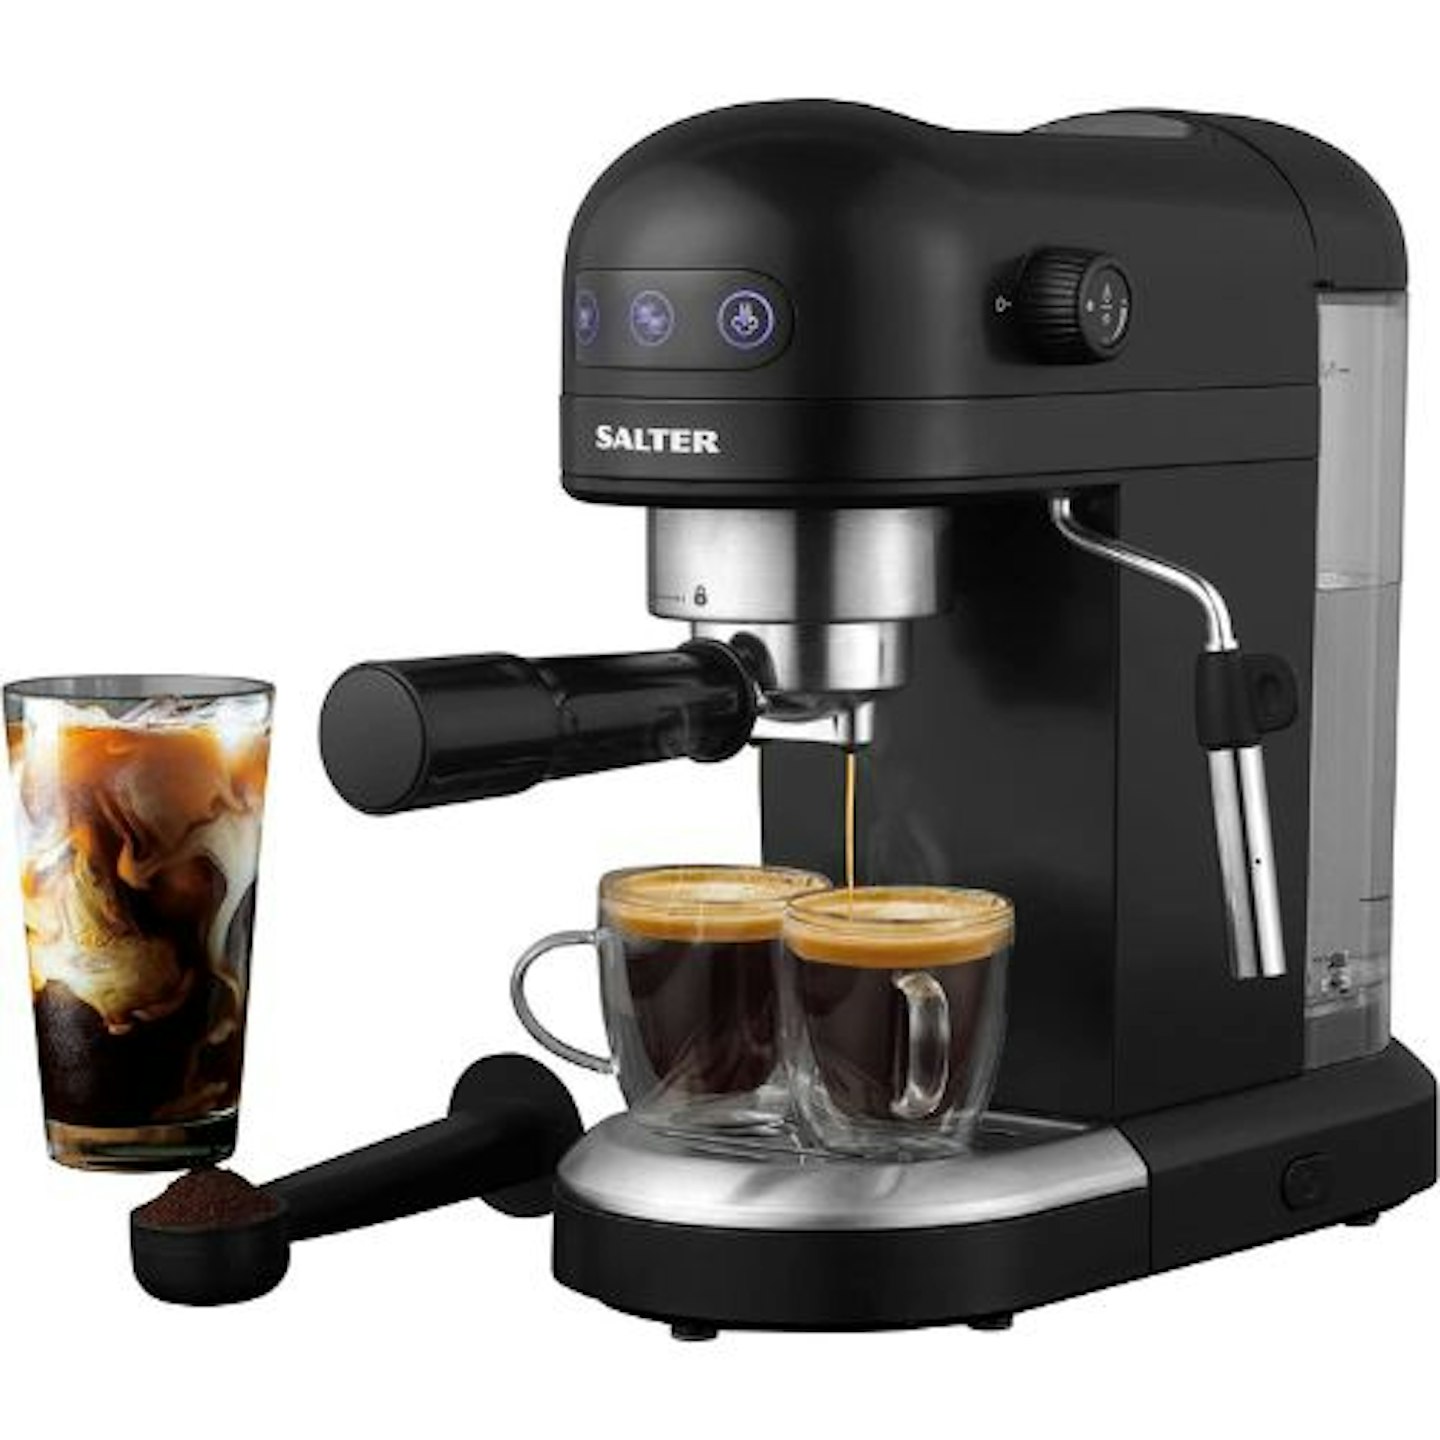 Salter Professional Espirista Coffee Machine Review